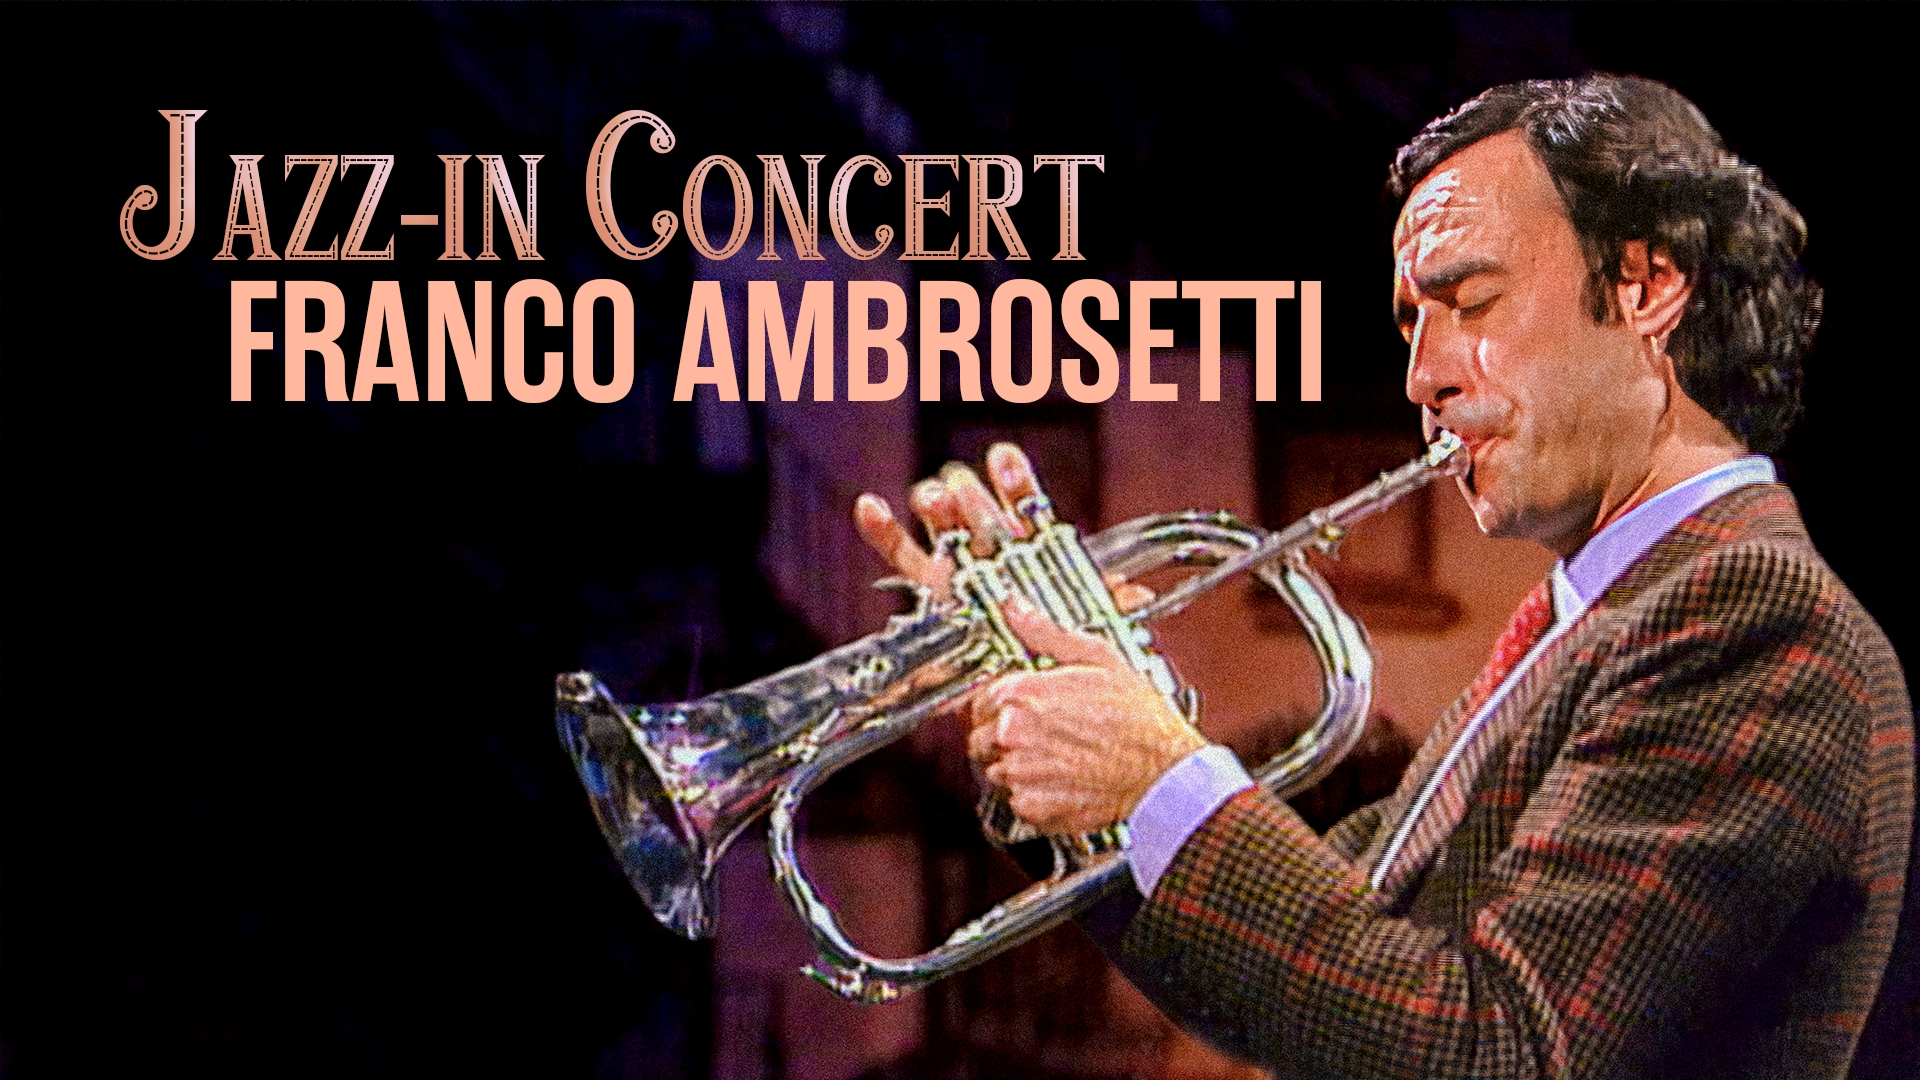 Jazz-in Concert - Franco Ambrosetti